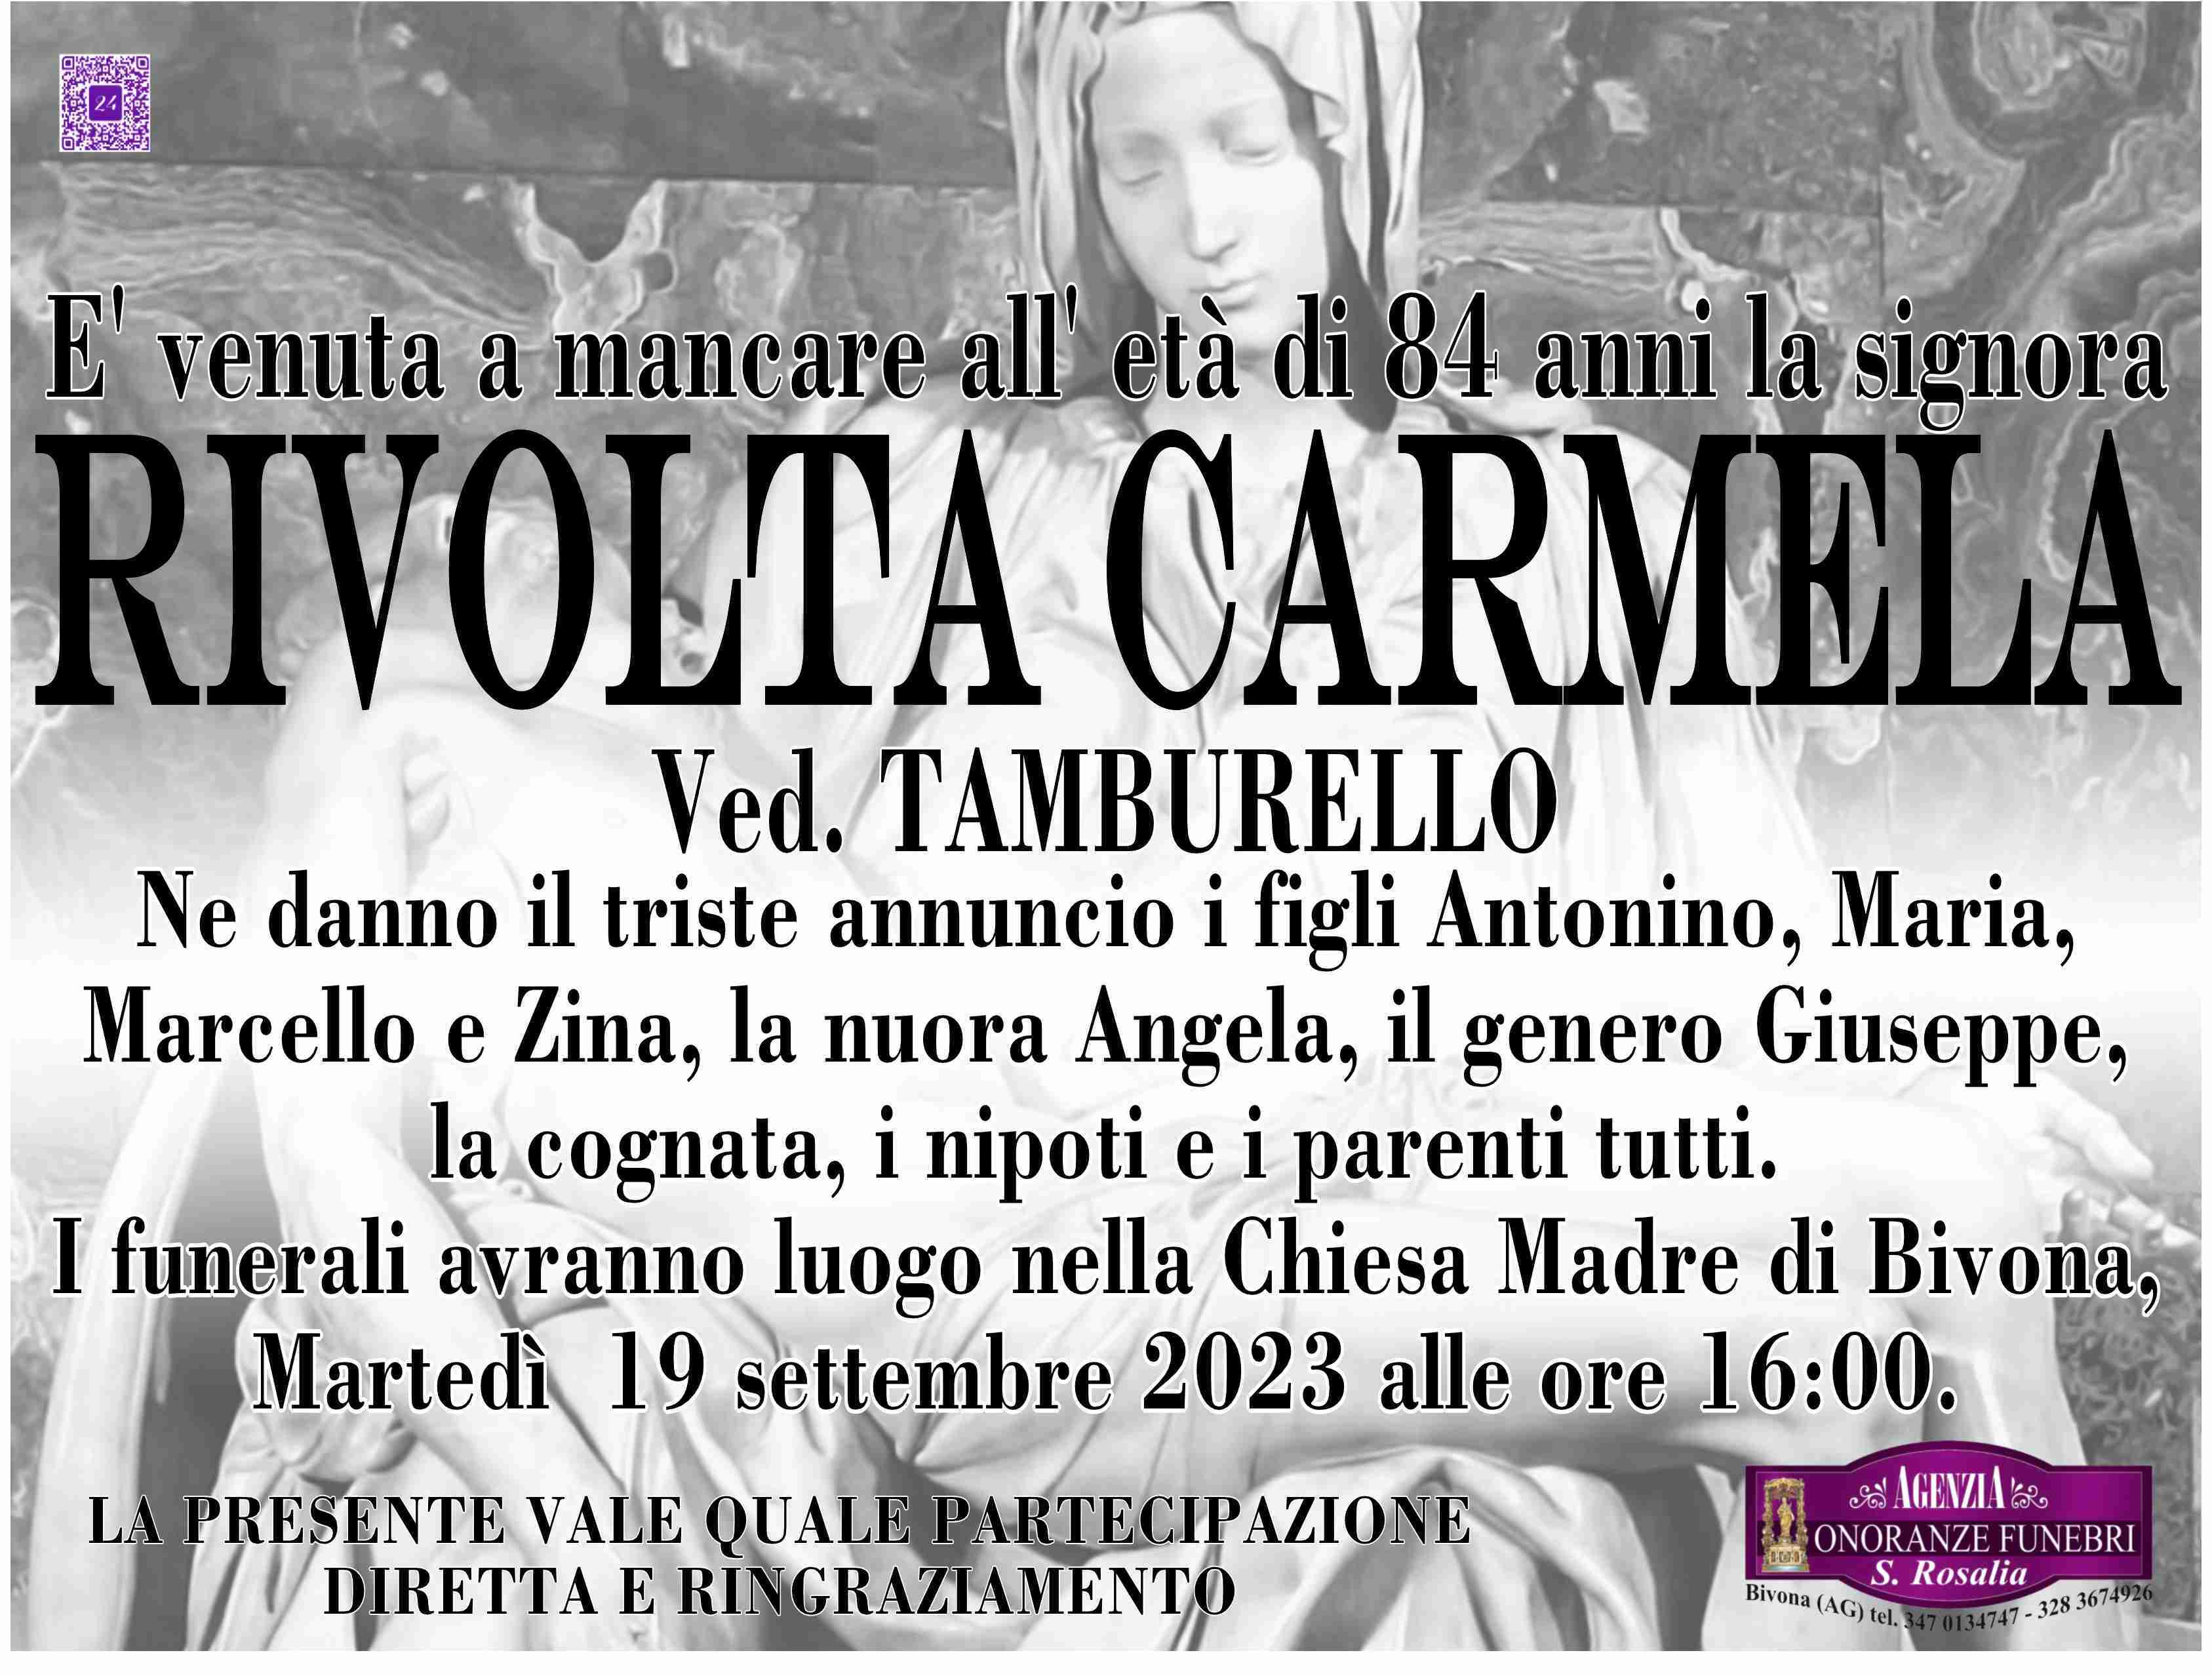 Carmela Rivolta